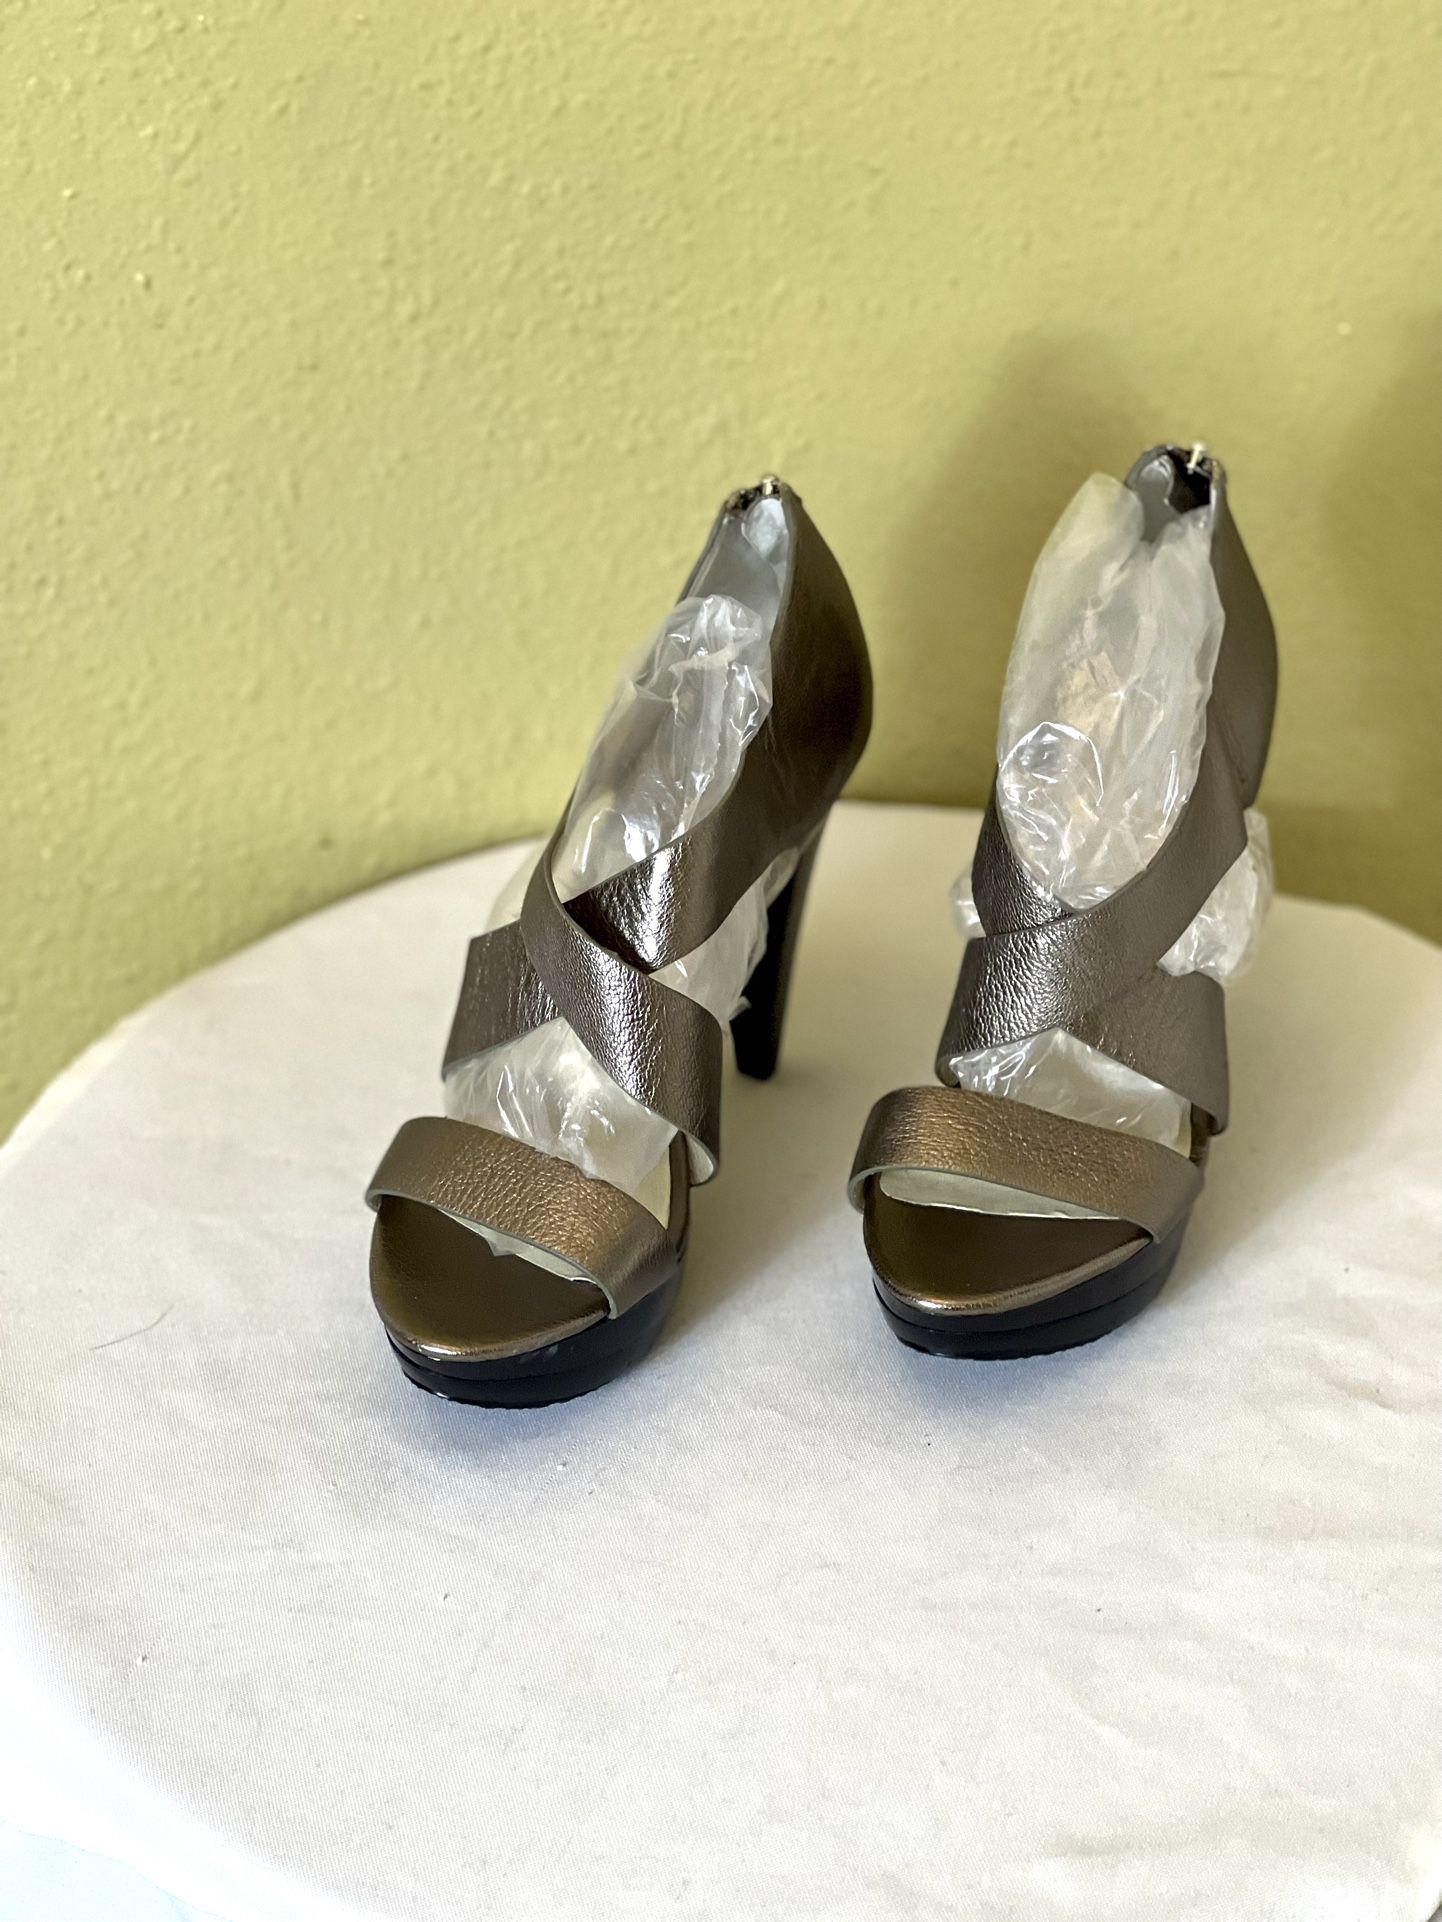 MICHAEL KORS💥NEW💥Metallic Bronze Leather Heels Size 6.5M